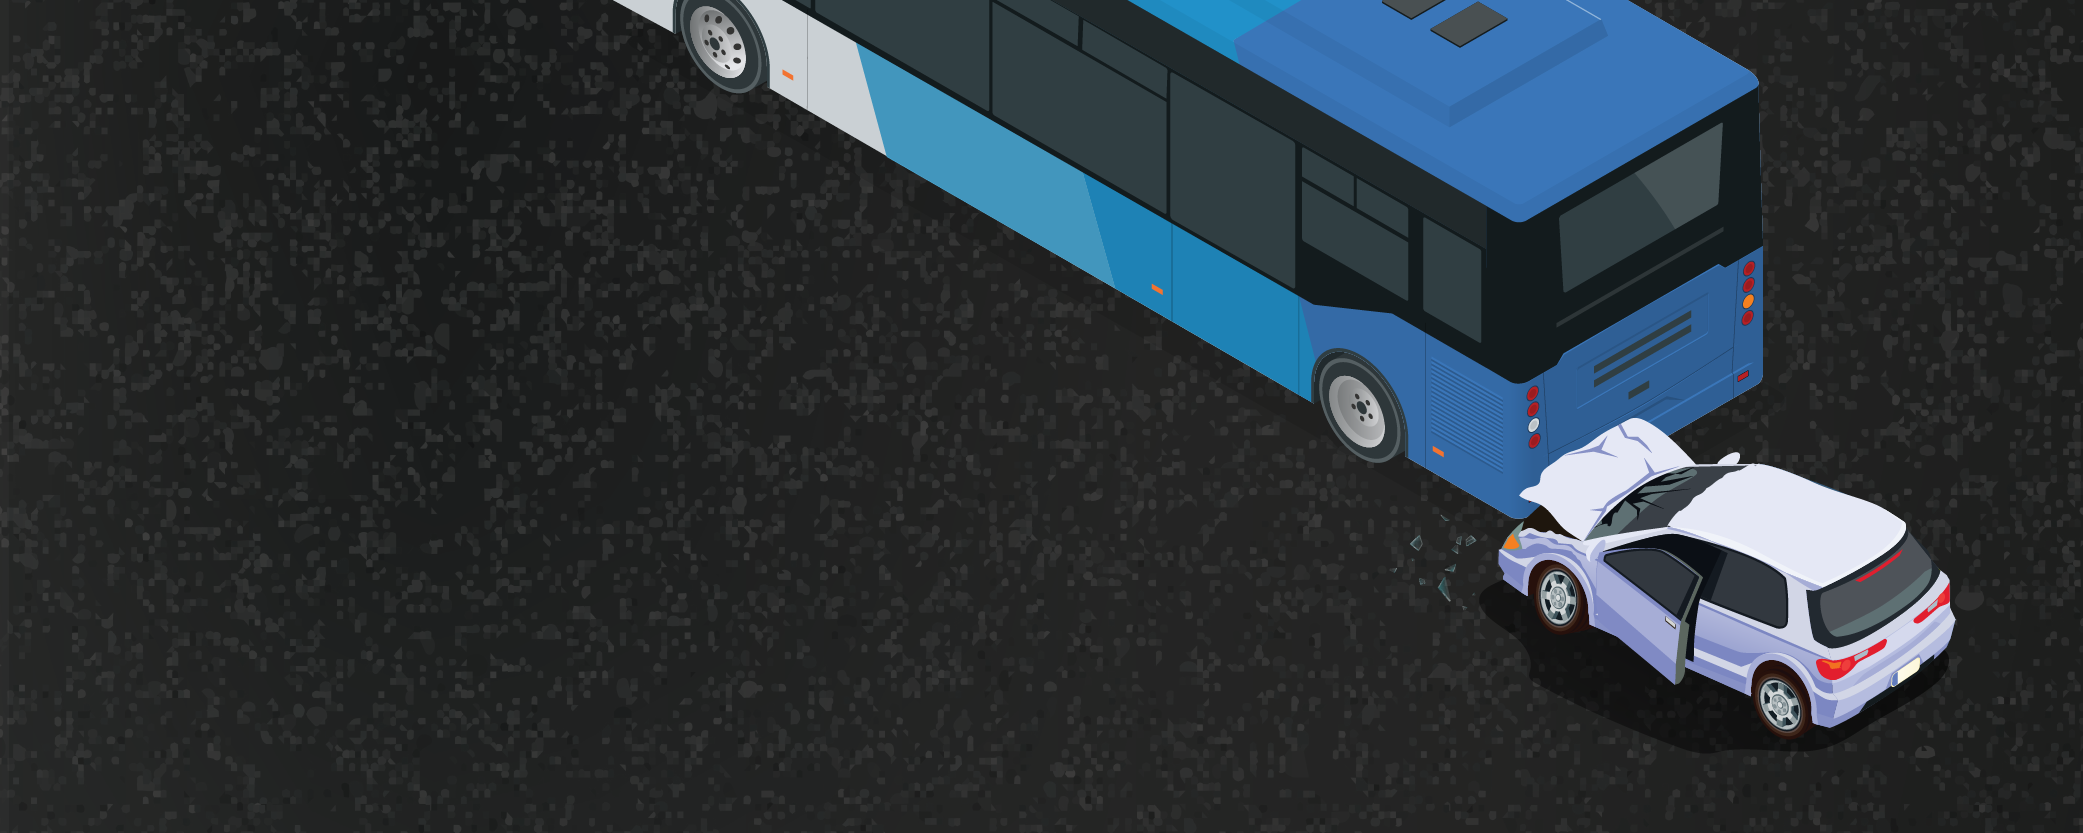 image of a car colliding behing a YRT bus